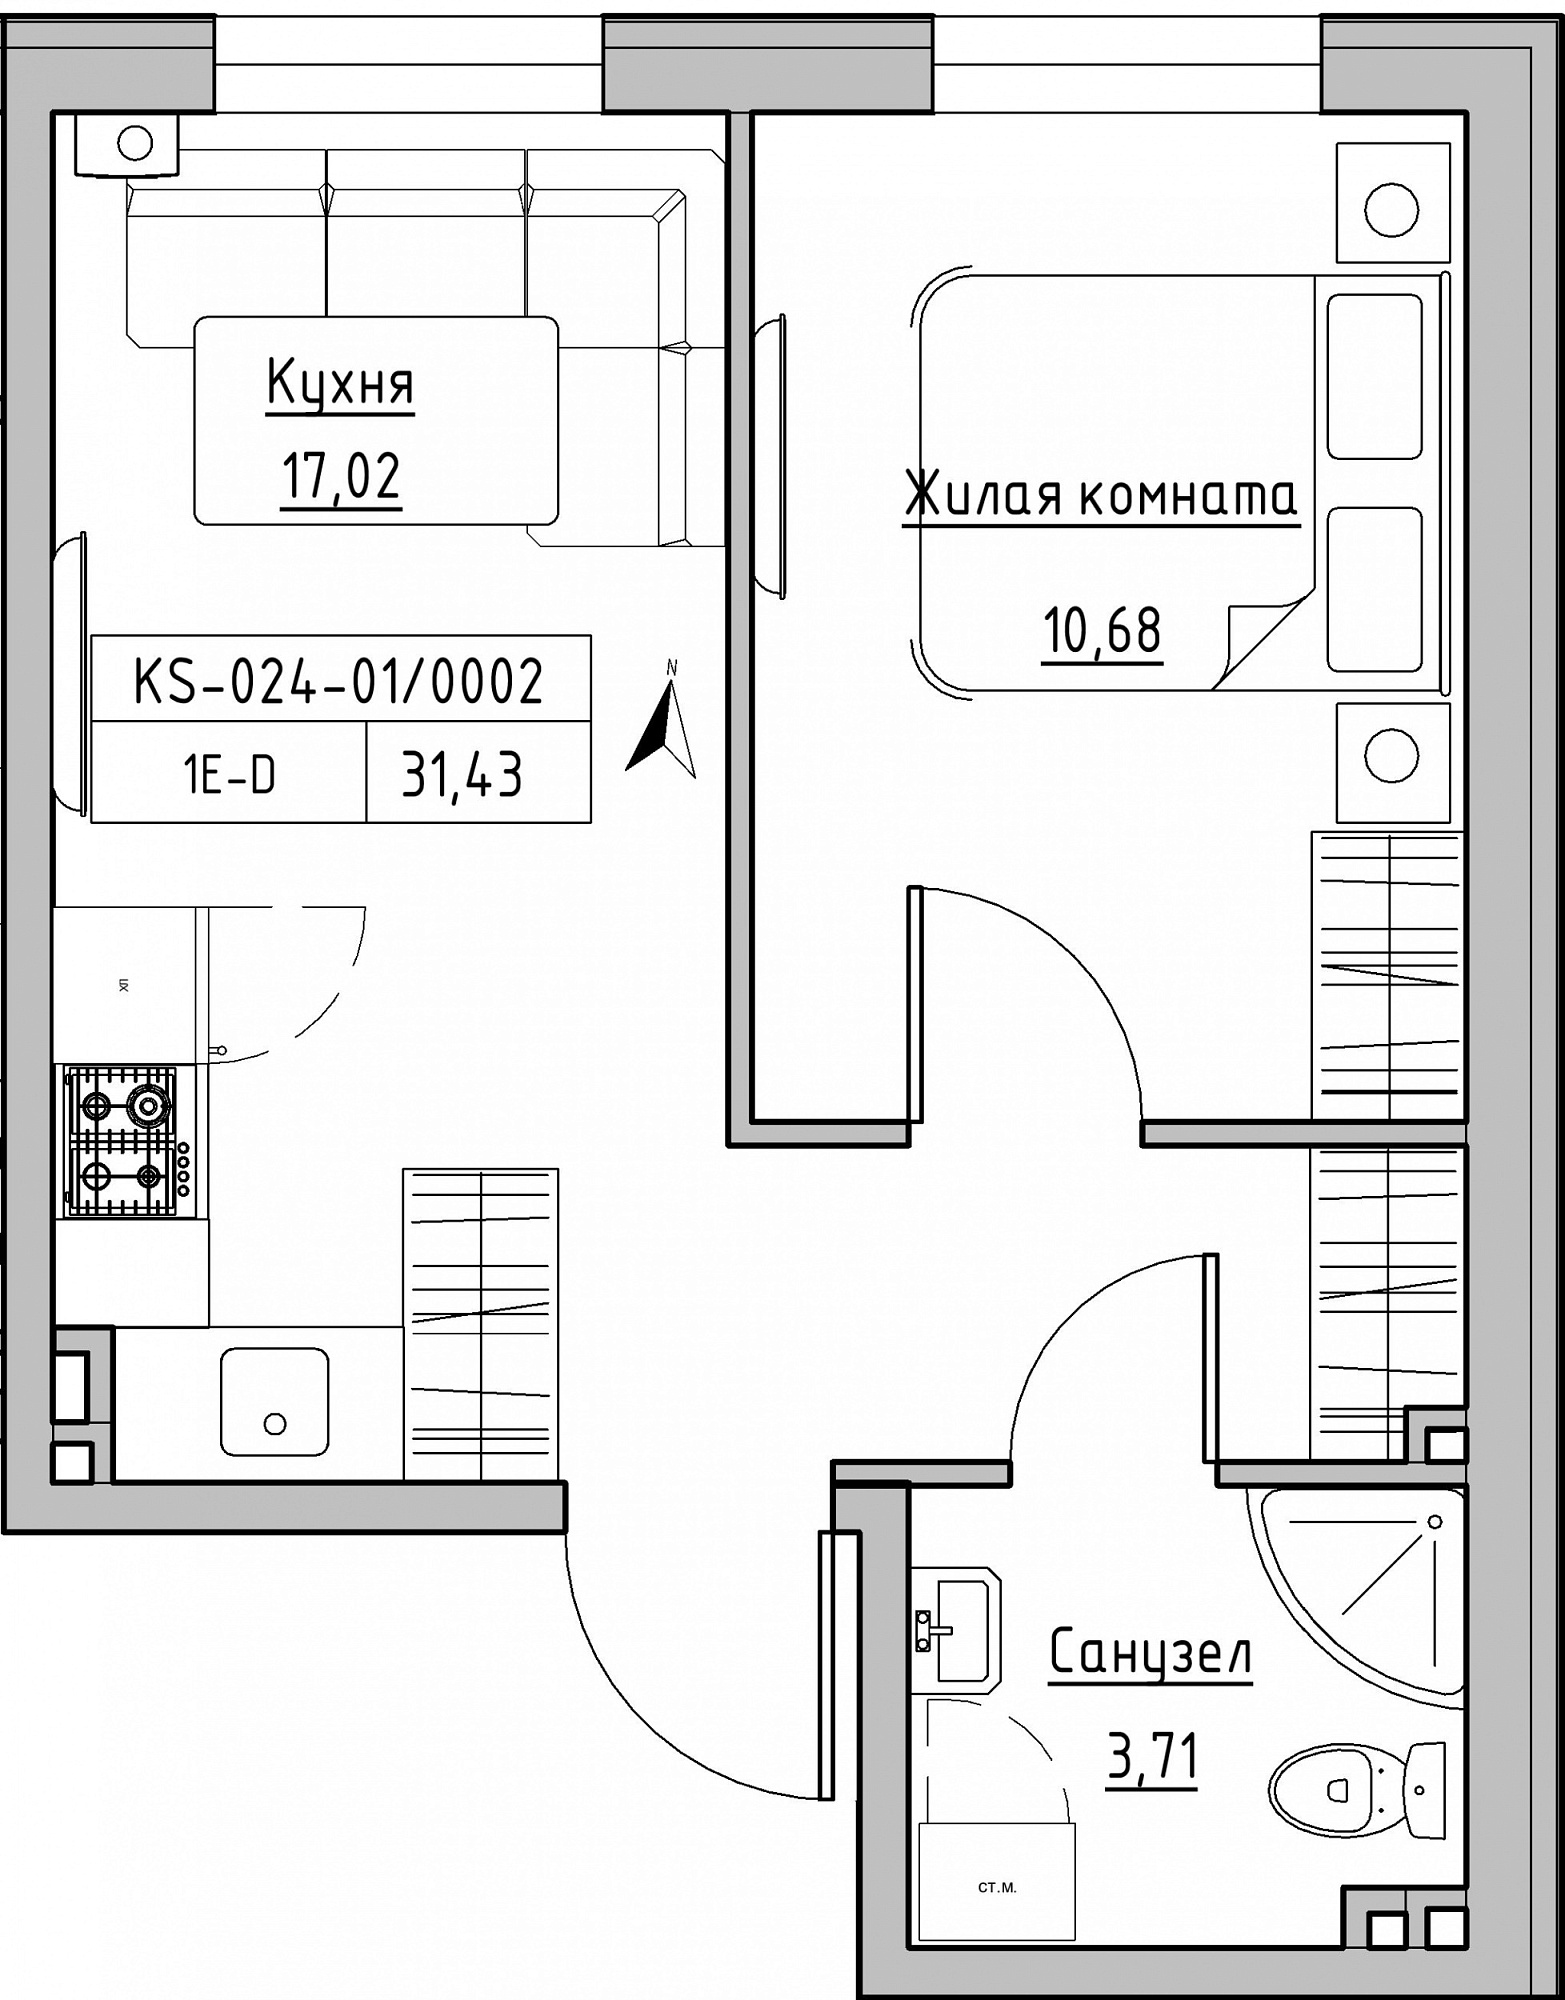 Planning 1-rm flats area 31.43m2, KS-024-01/0002.